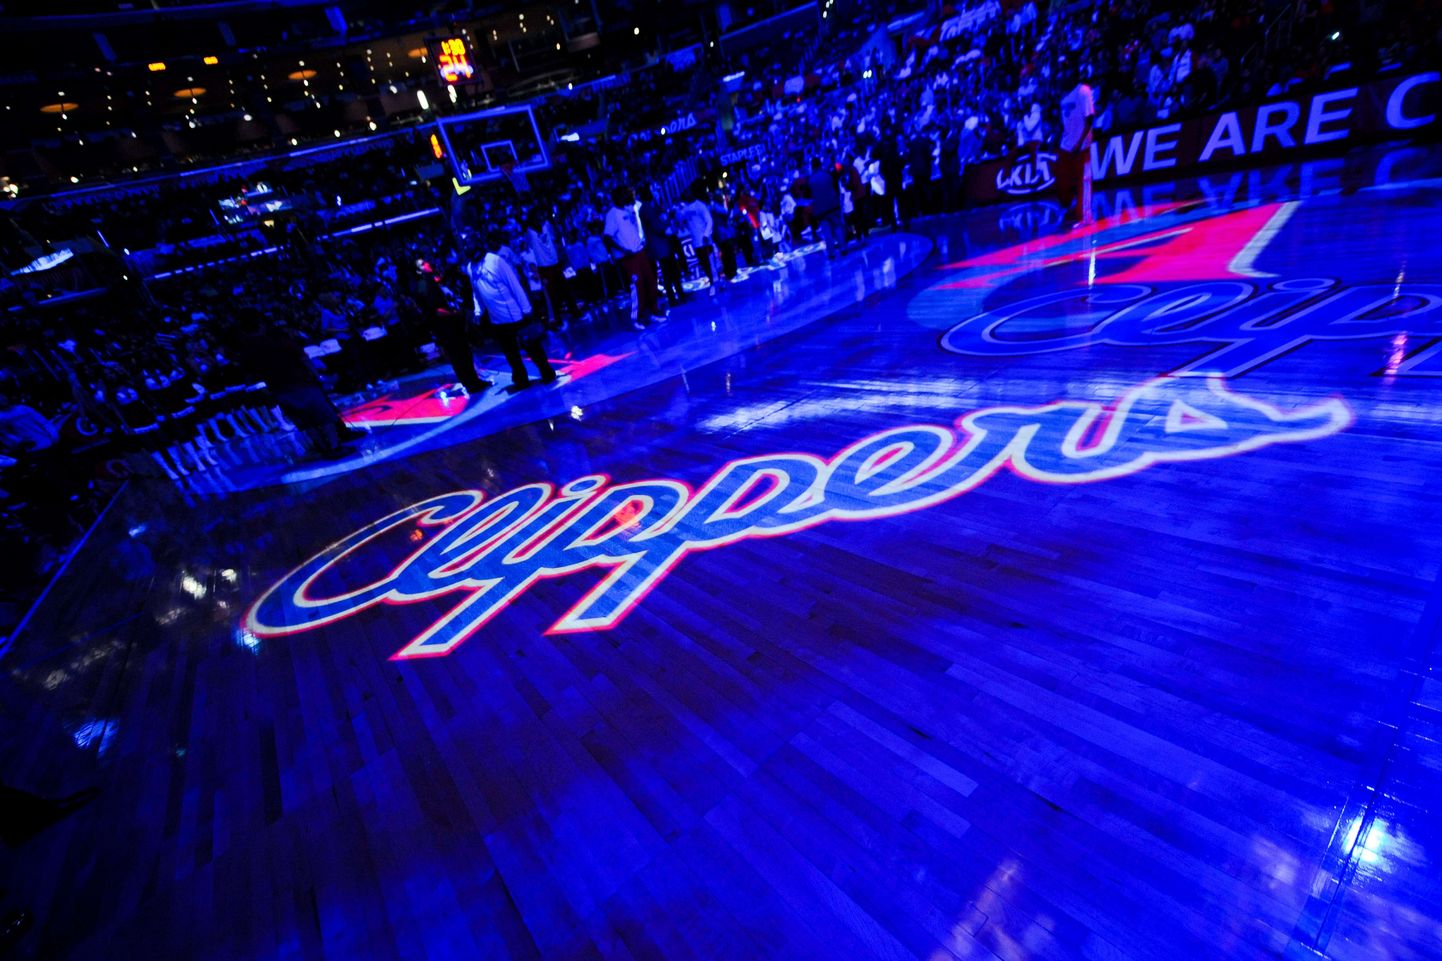 Losandželosas "Clippers" logo